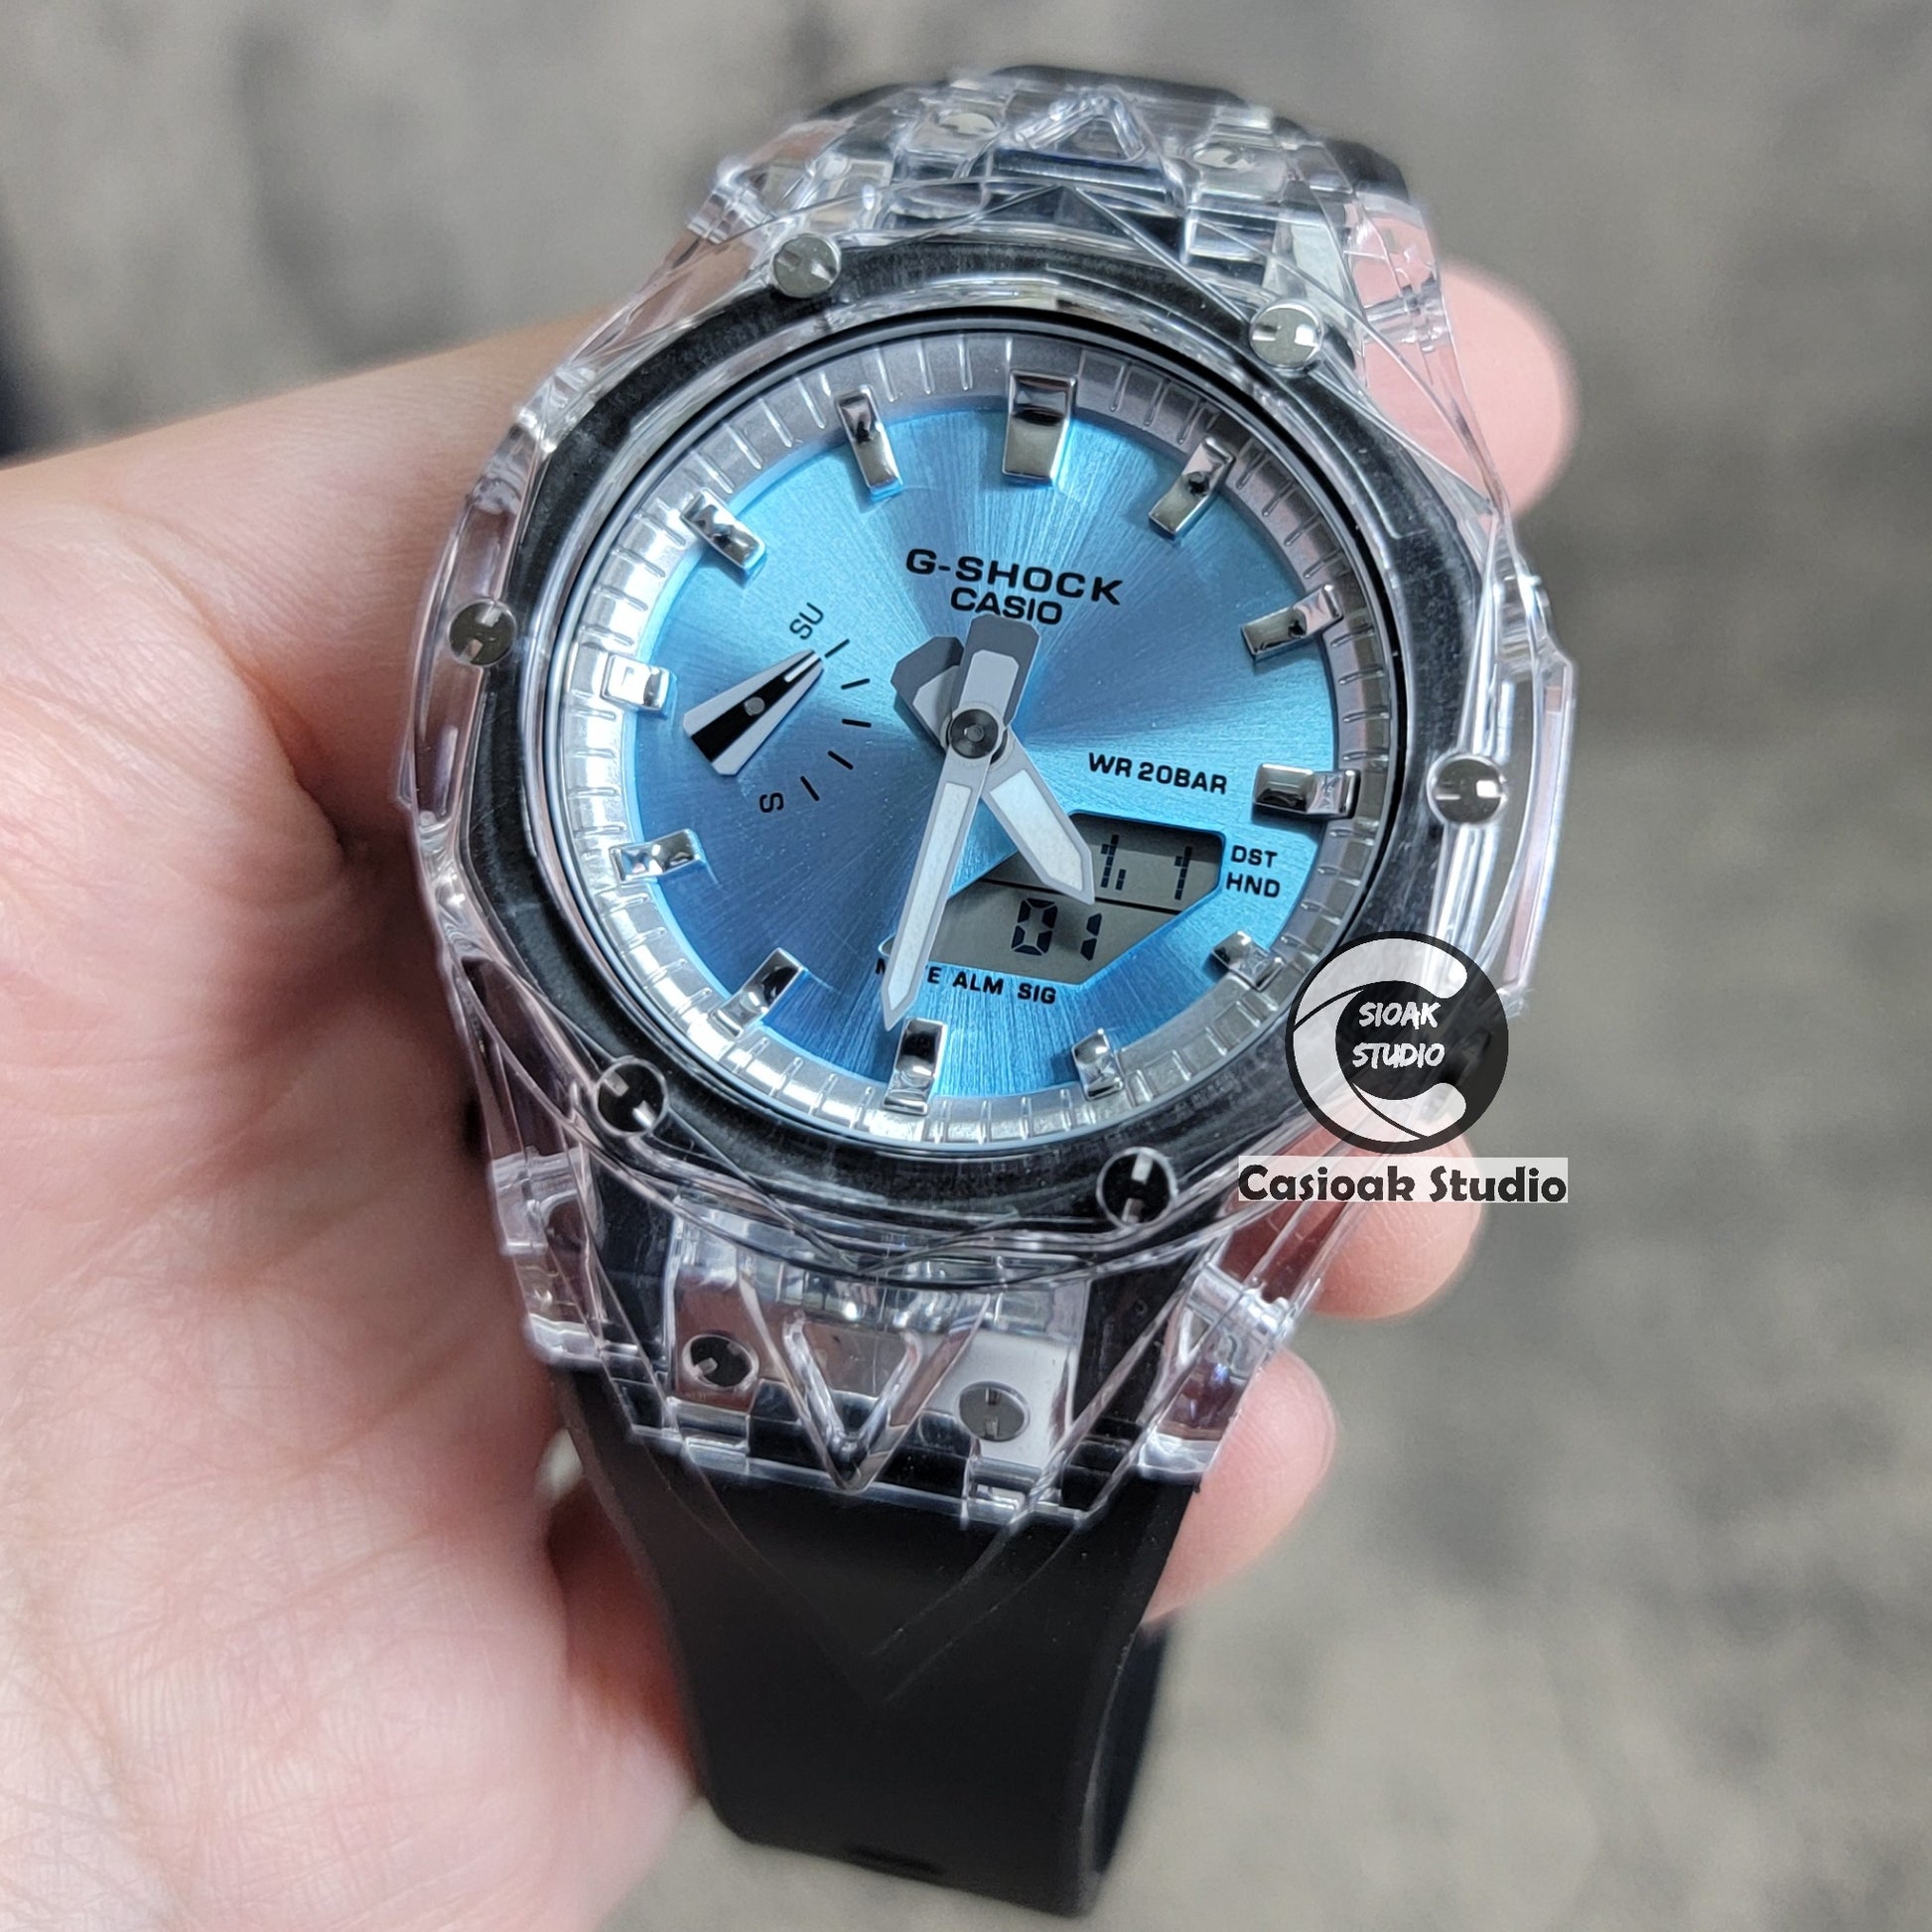 Casioak Mod Watch Transparent Case Black Strap Silverw Time Mark Blue Dial 44mm - Casioak Studio